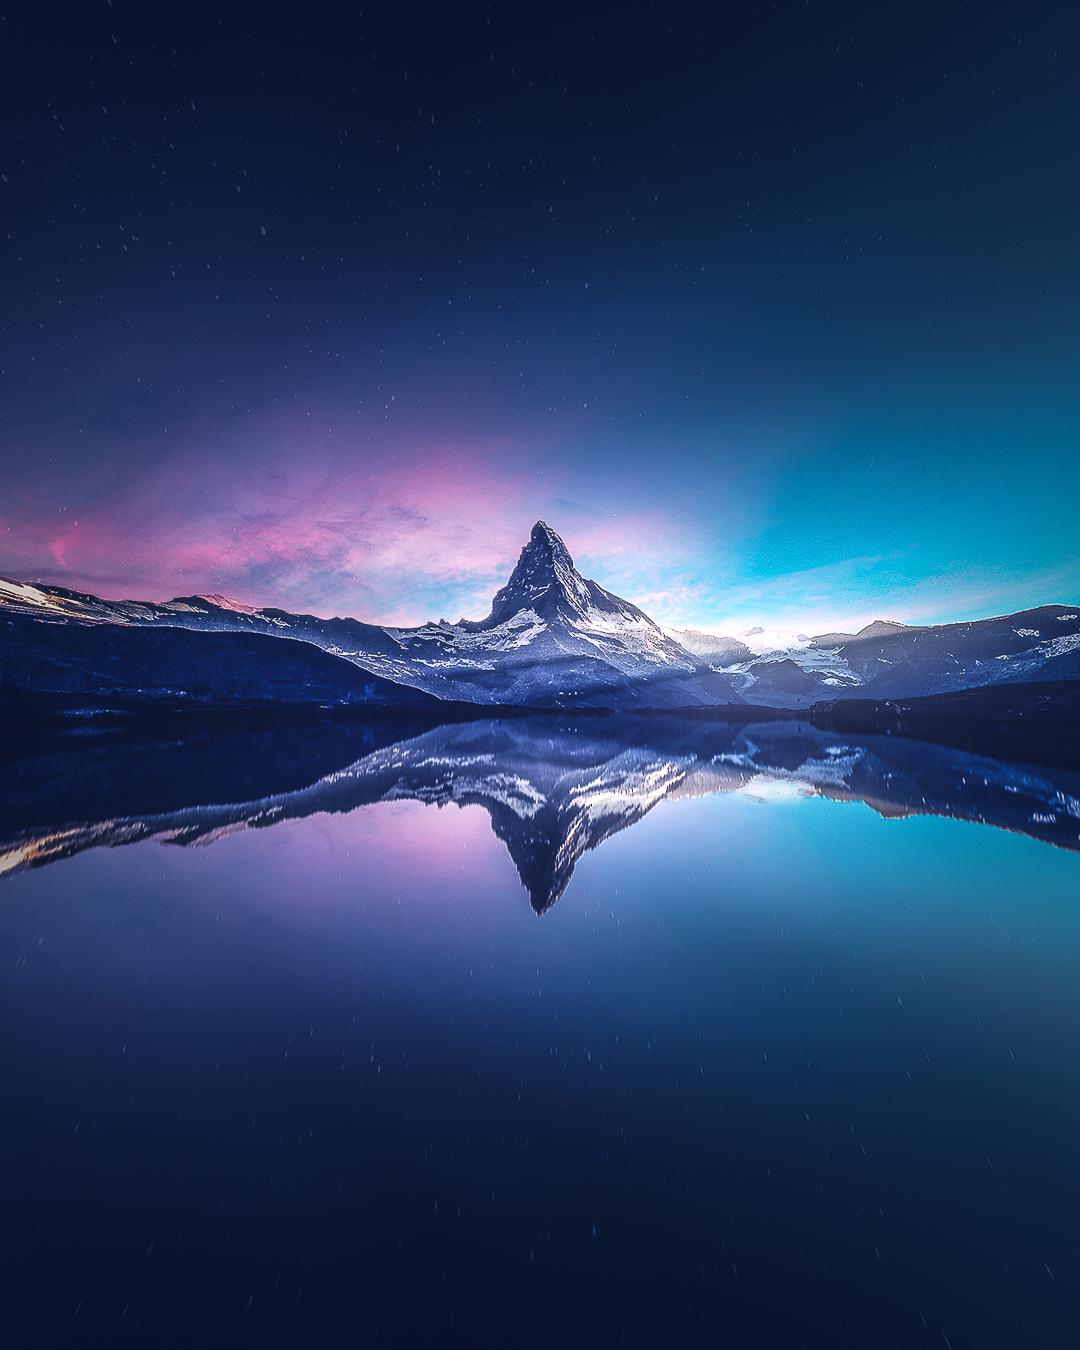 General 1080x1350 landscape mountains lake snow reflection dawn blue stars symmetry Switzerland portrait display Matterhorn